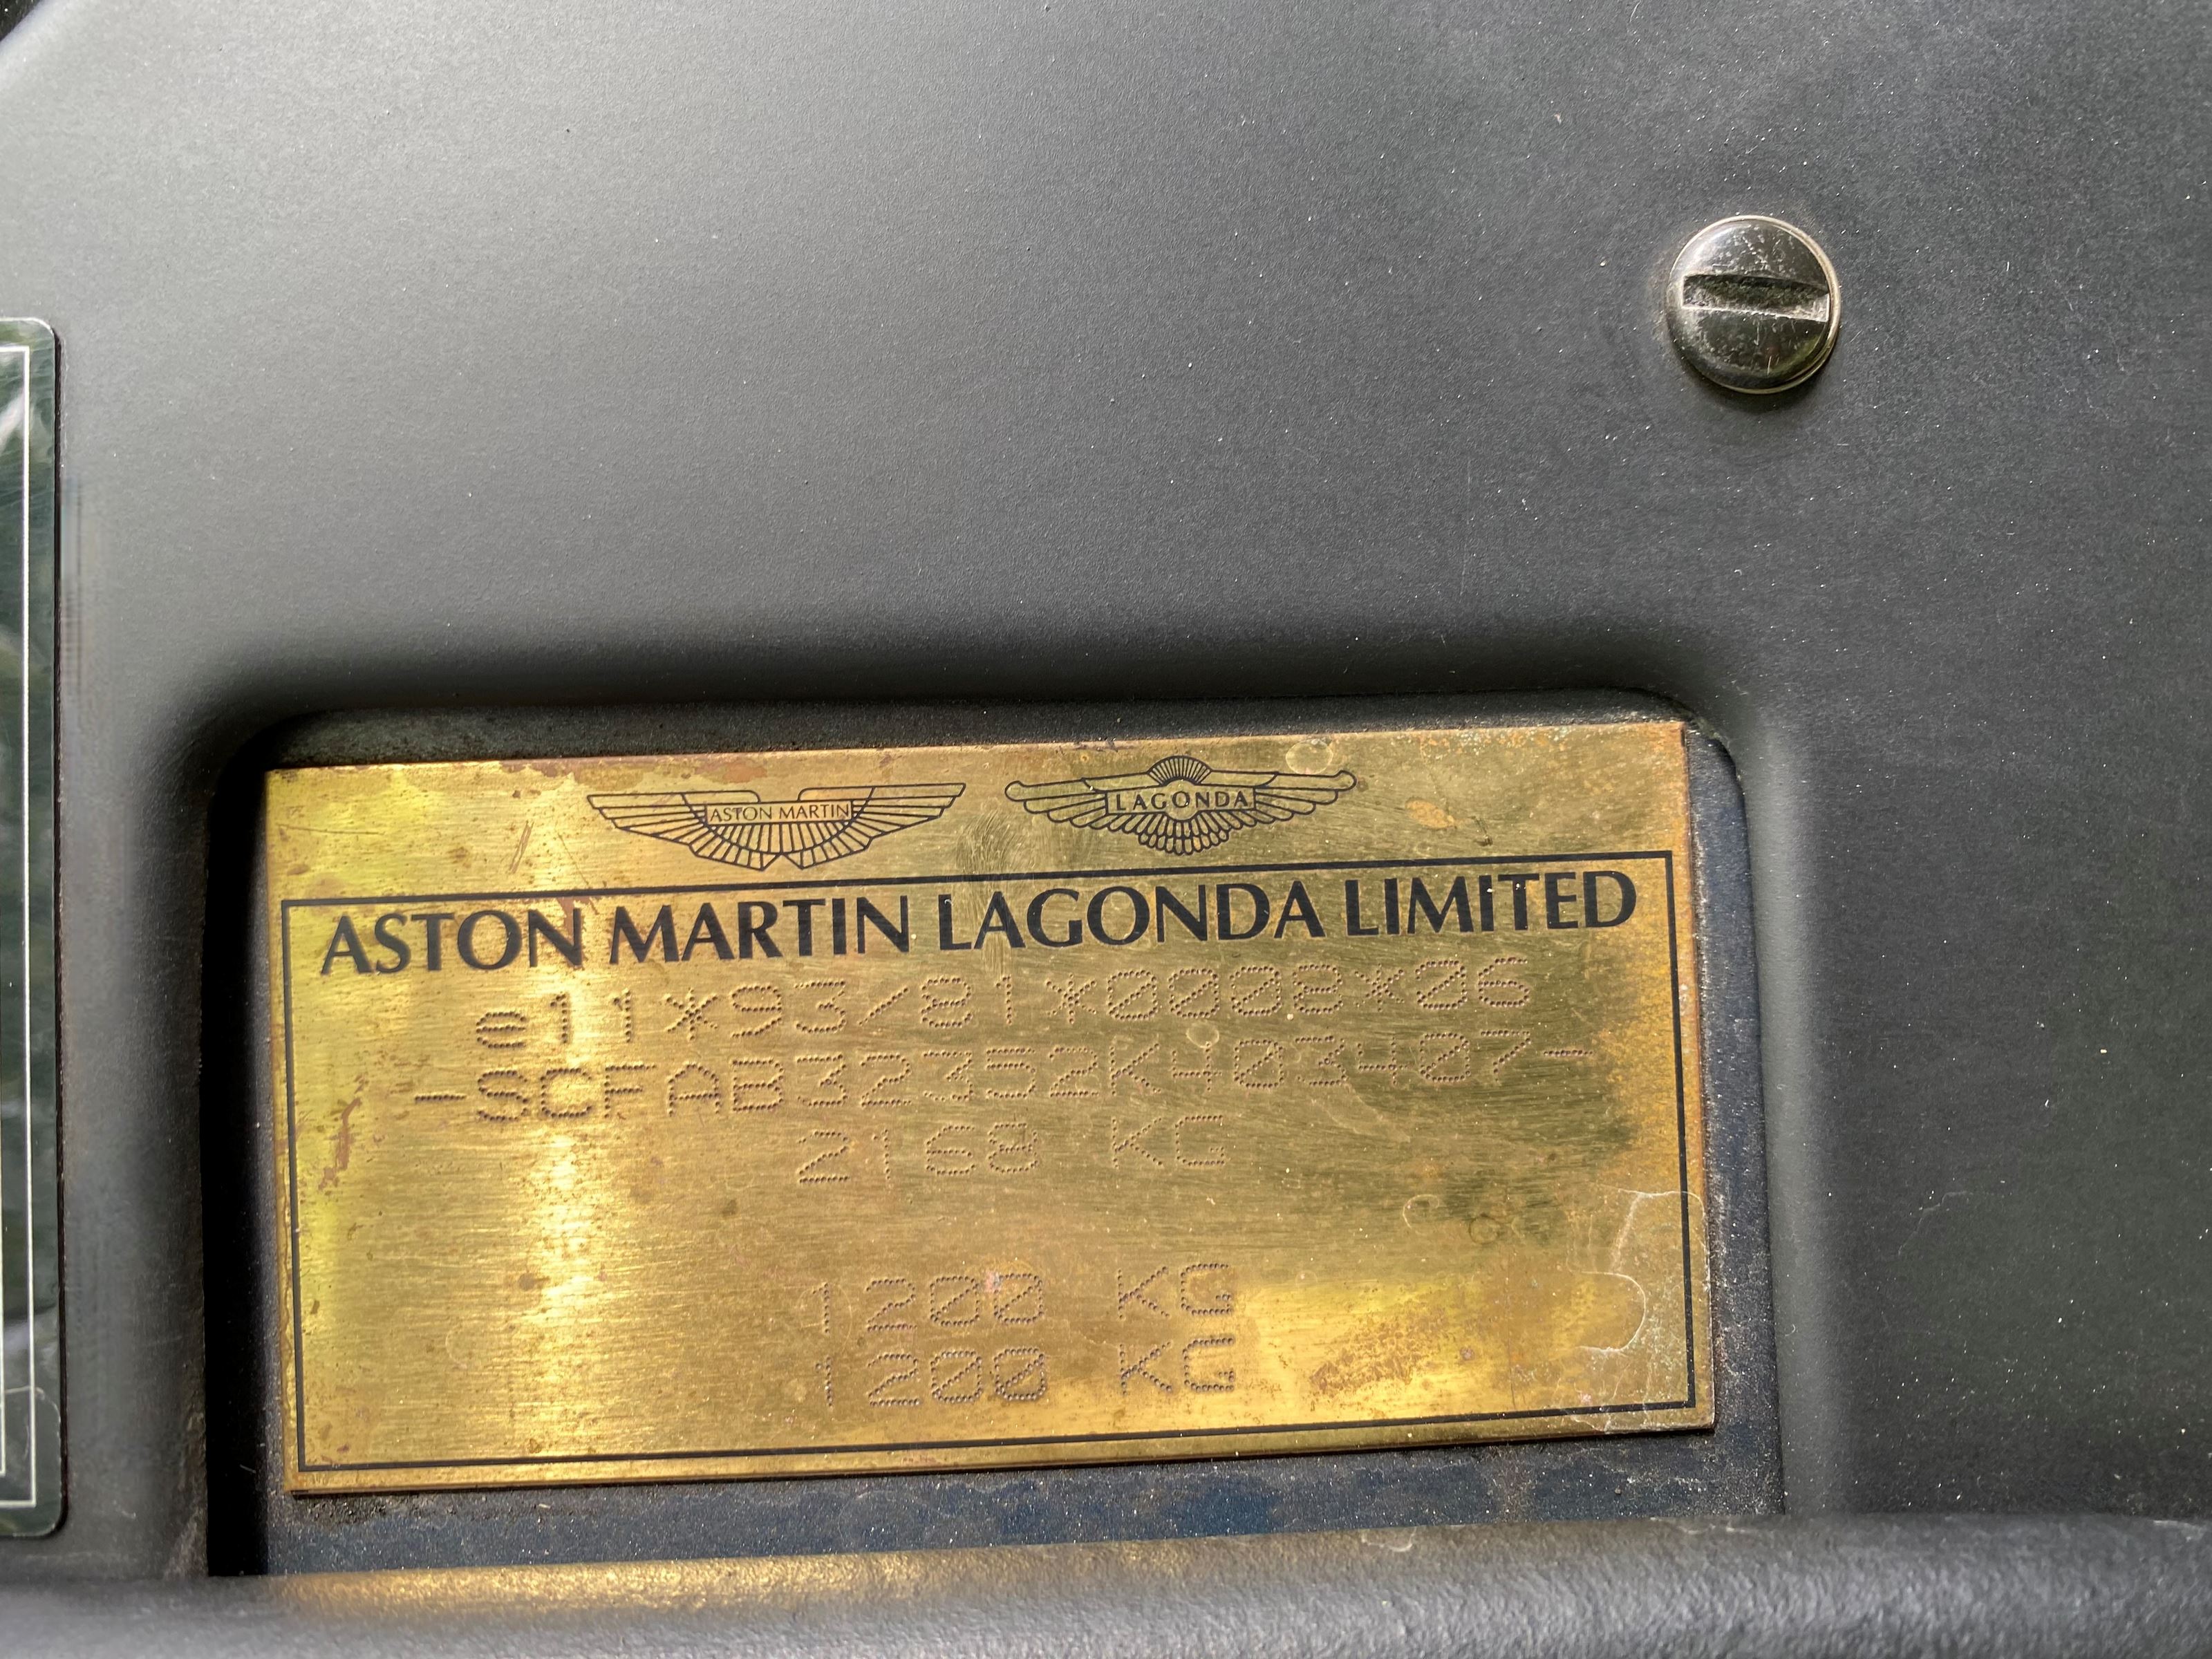 Aston martin db7 maaywn65jlwxb e bc83d